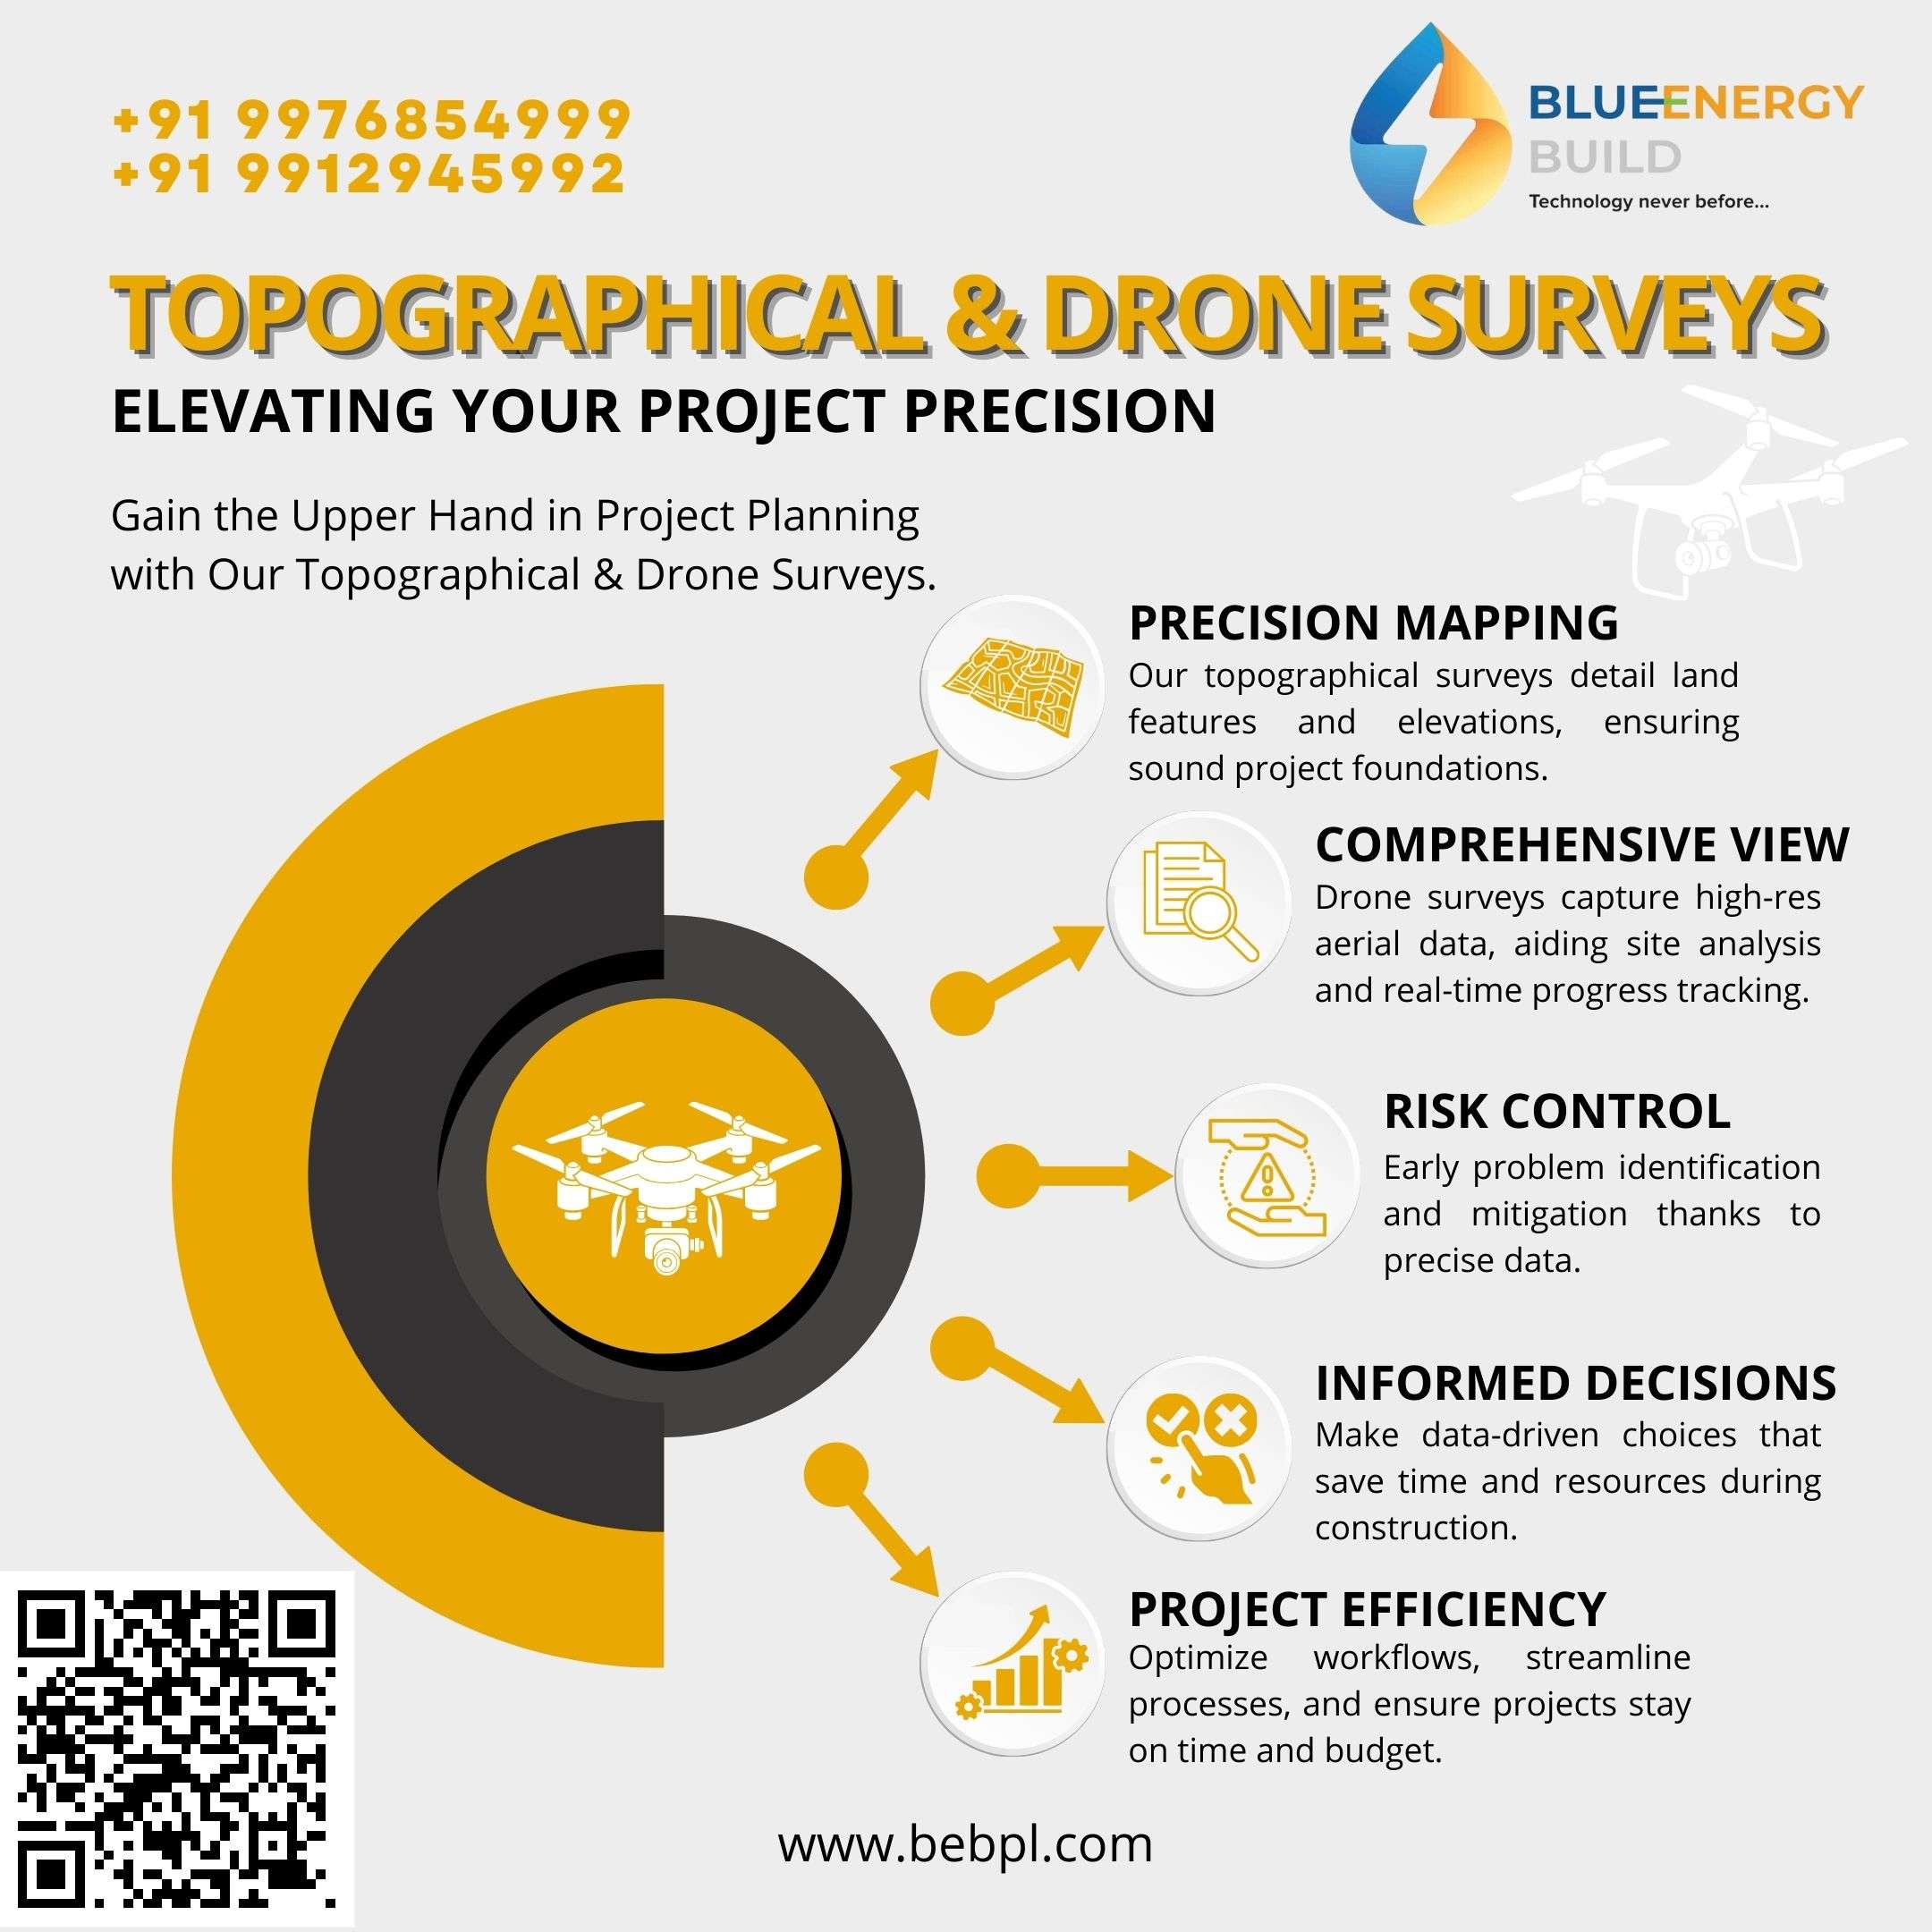 BlueEnergy Build Topographical & Drone Survey